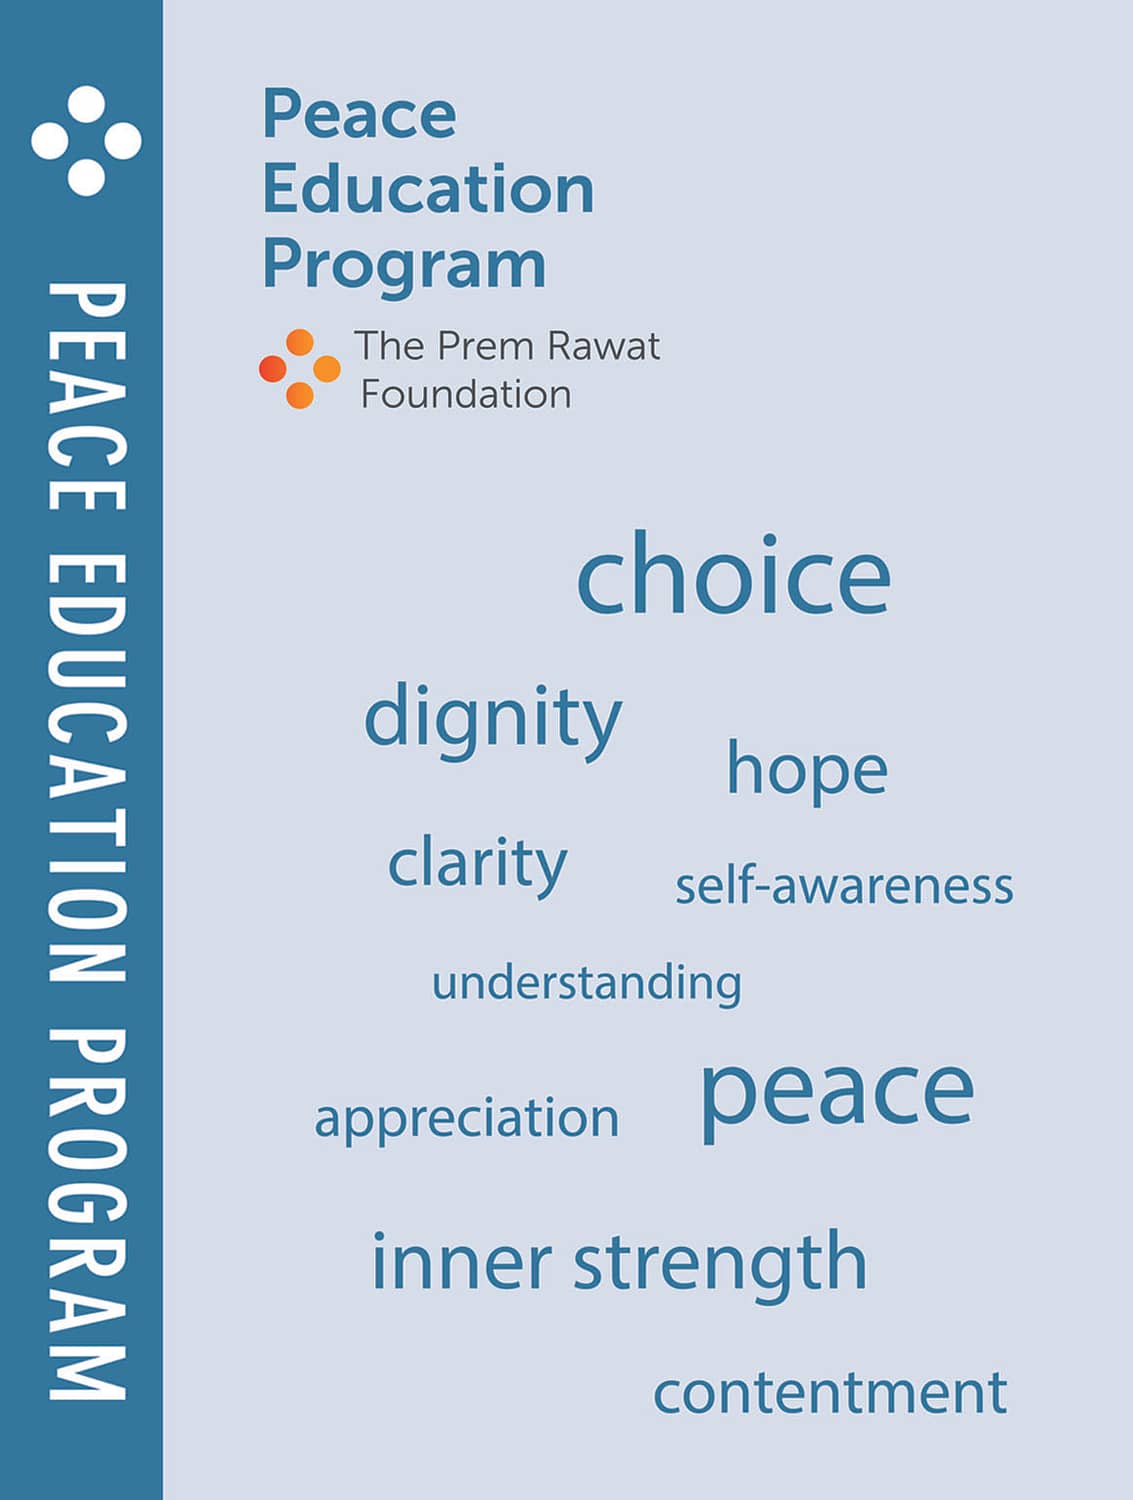 Peace Education Program 10 themes